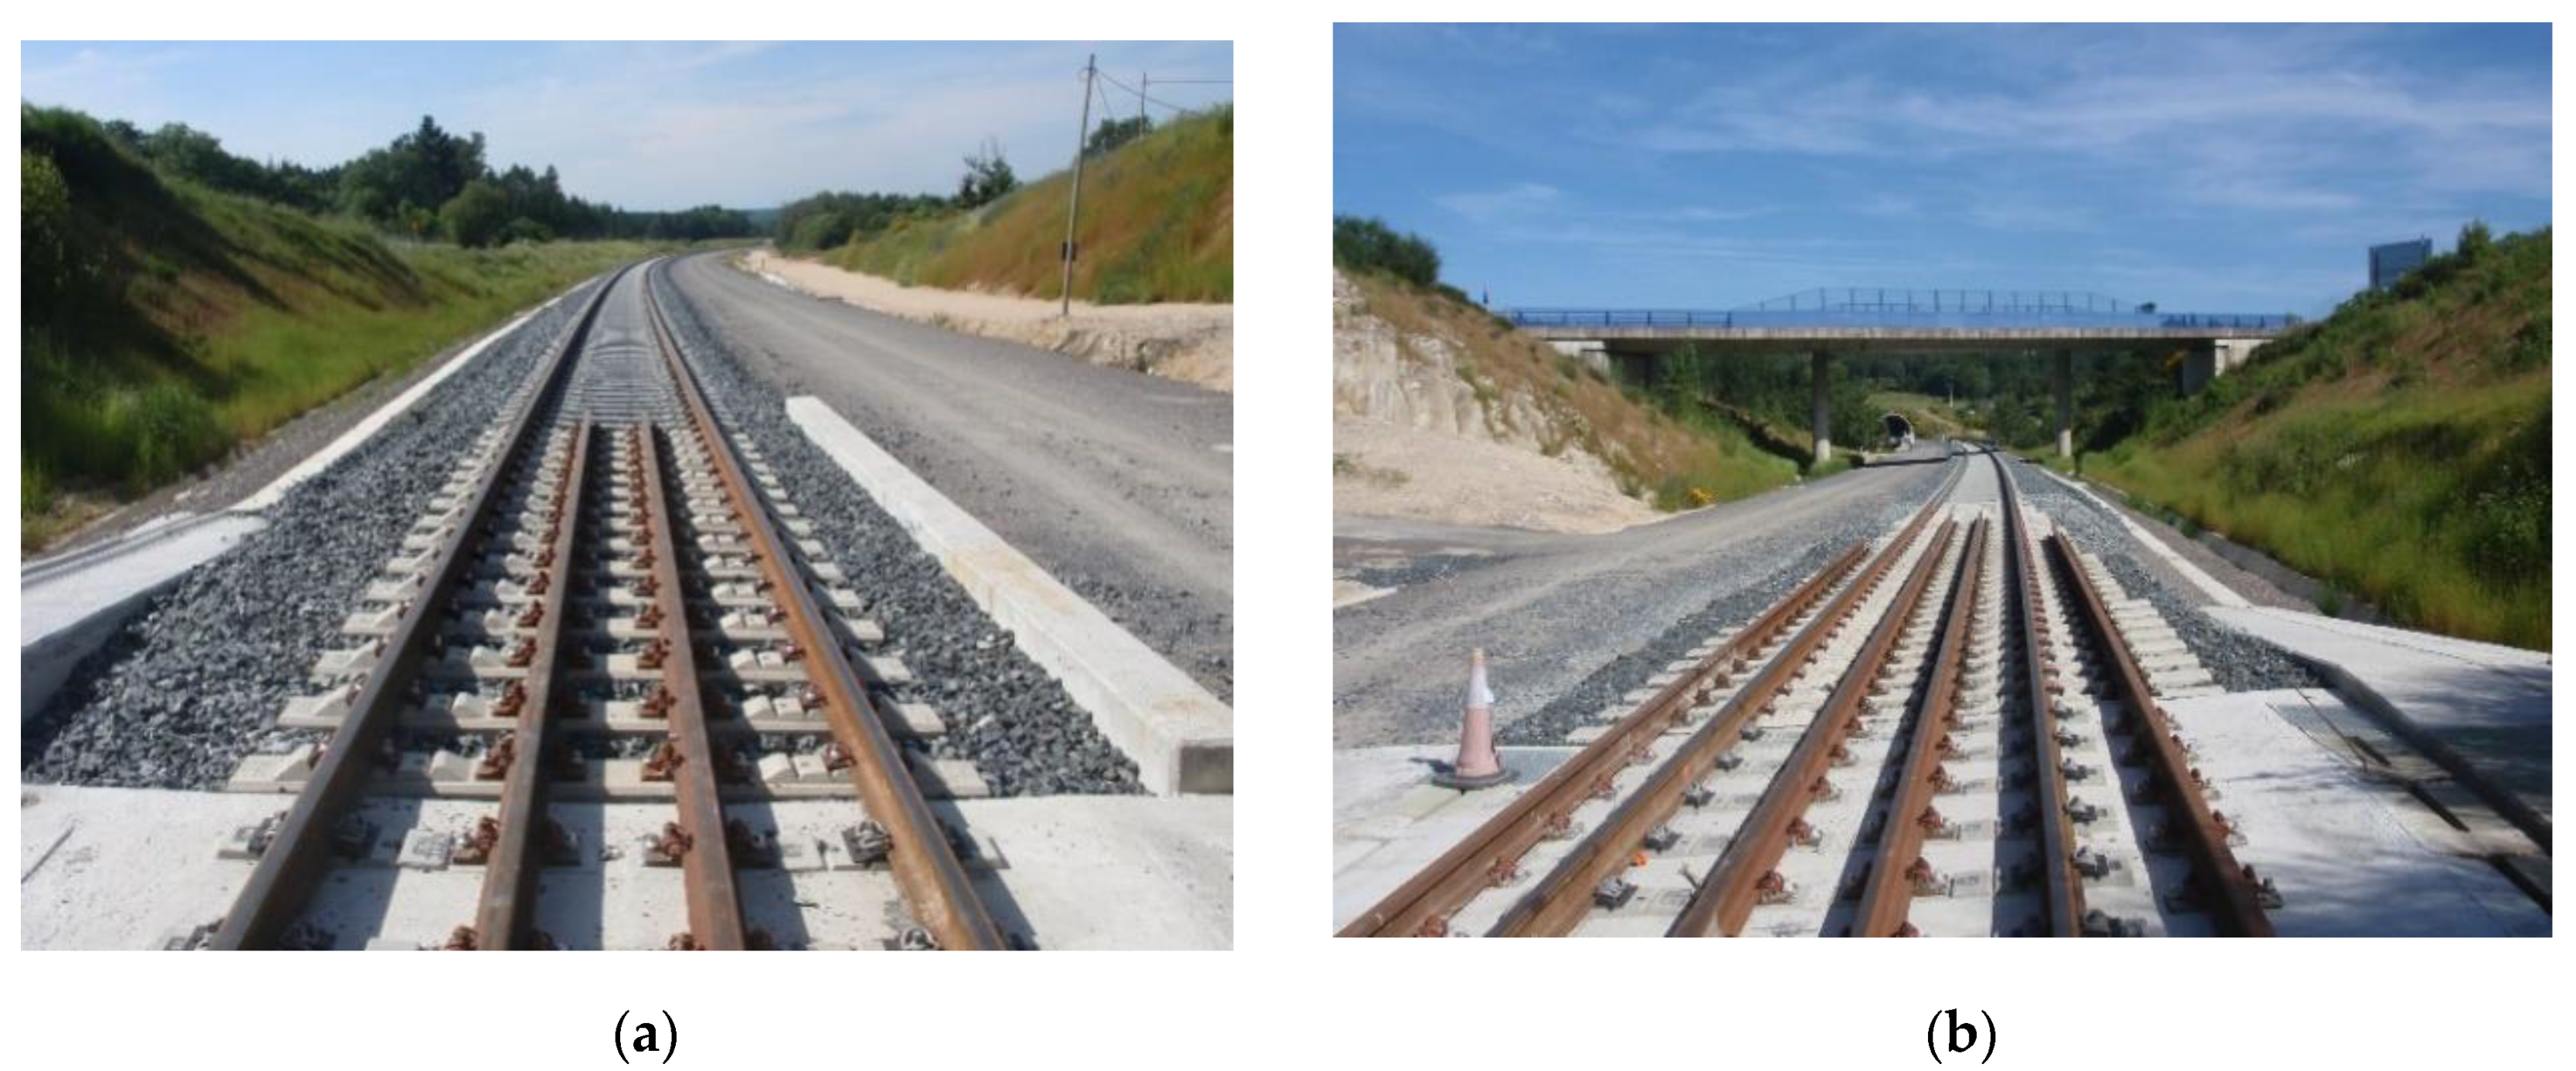 Rock Slab “Granite”, Model Railway